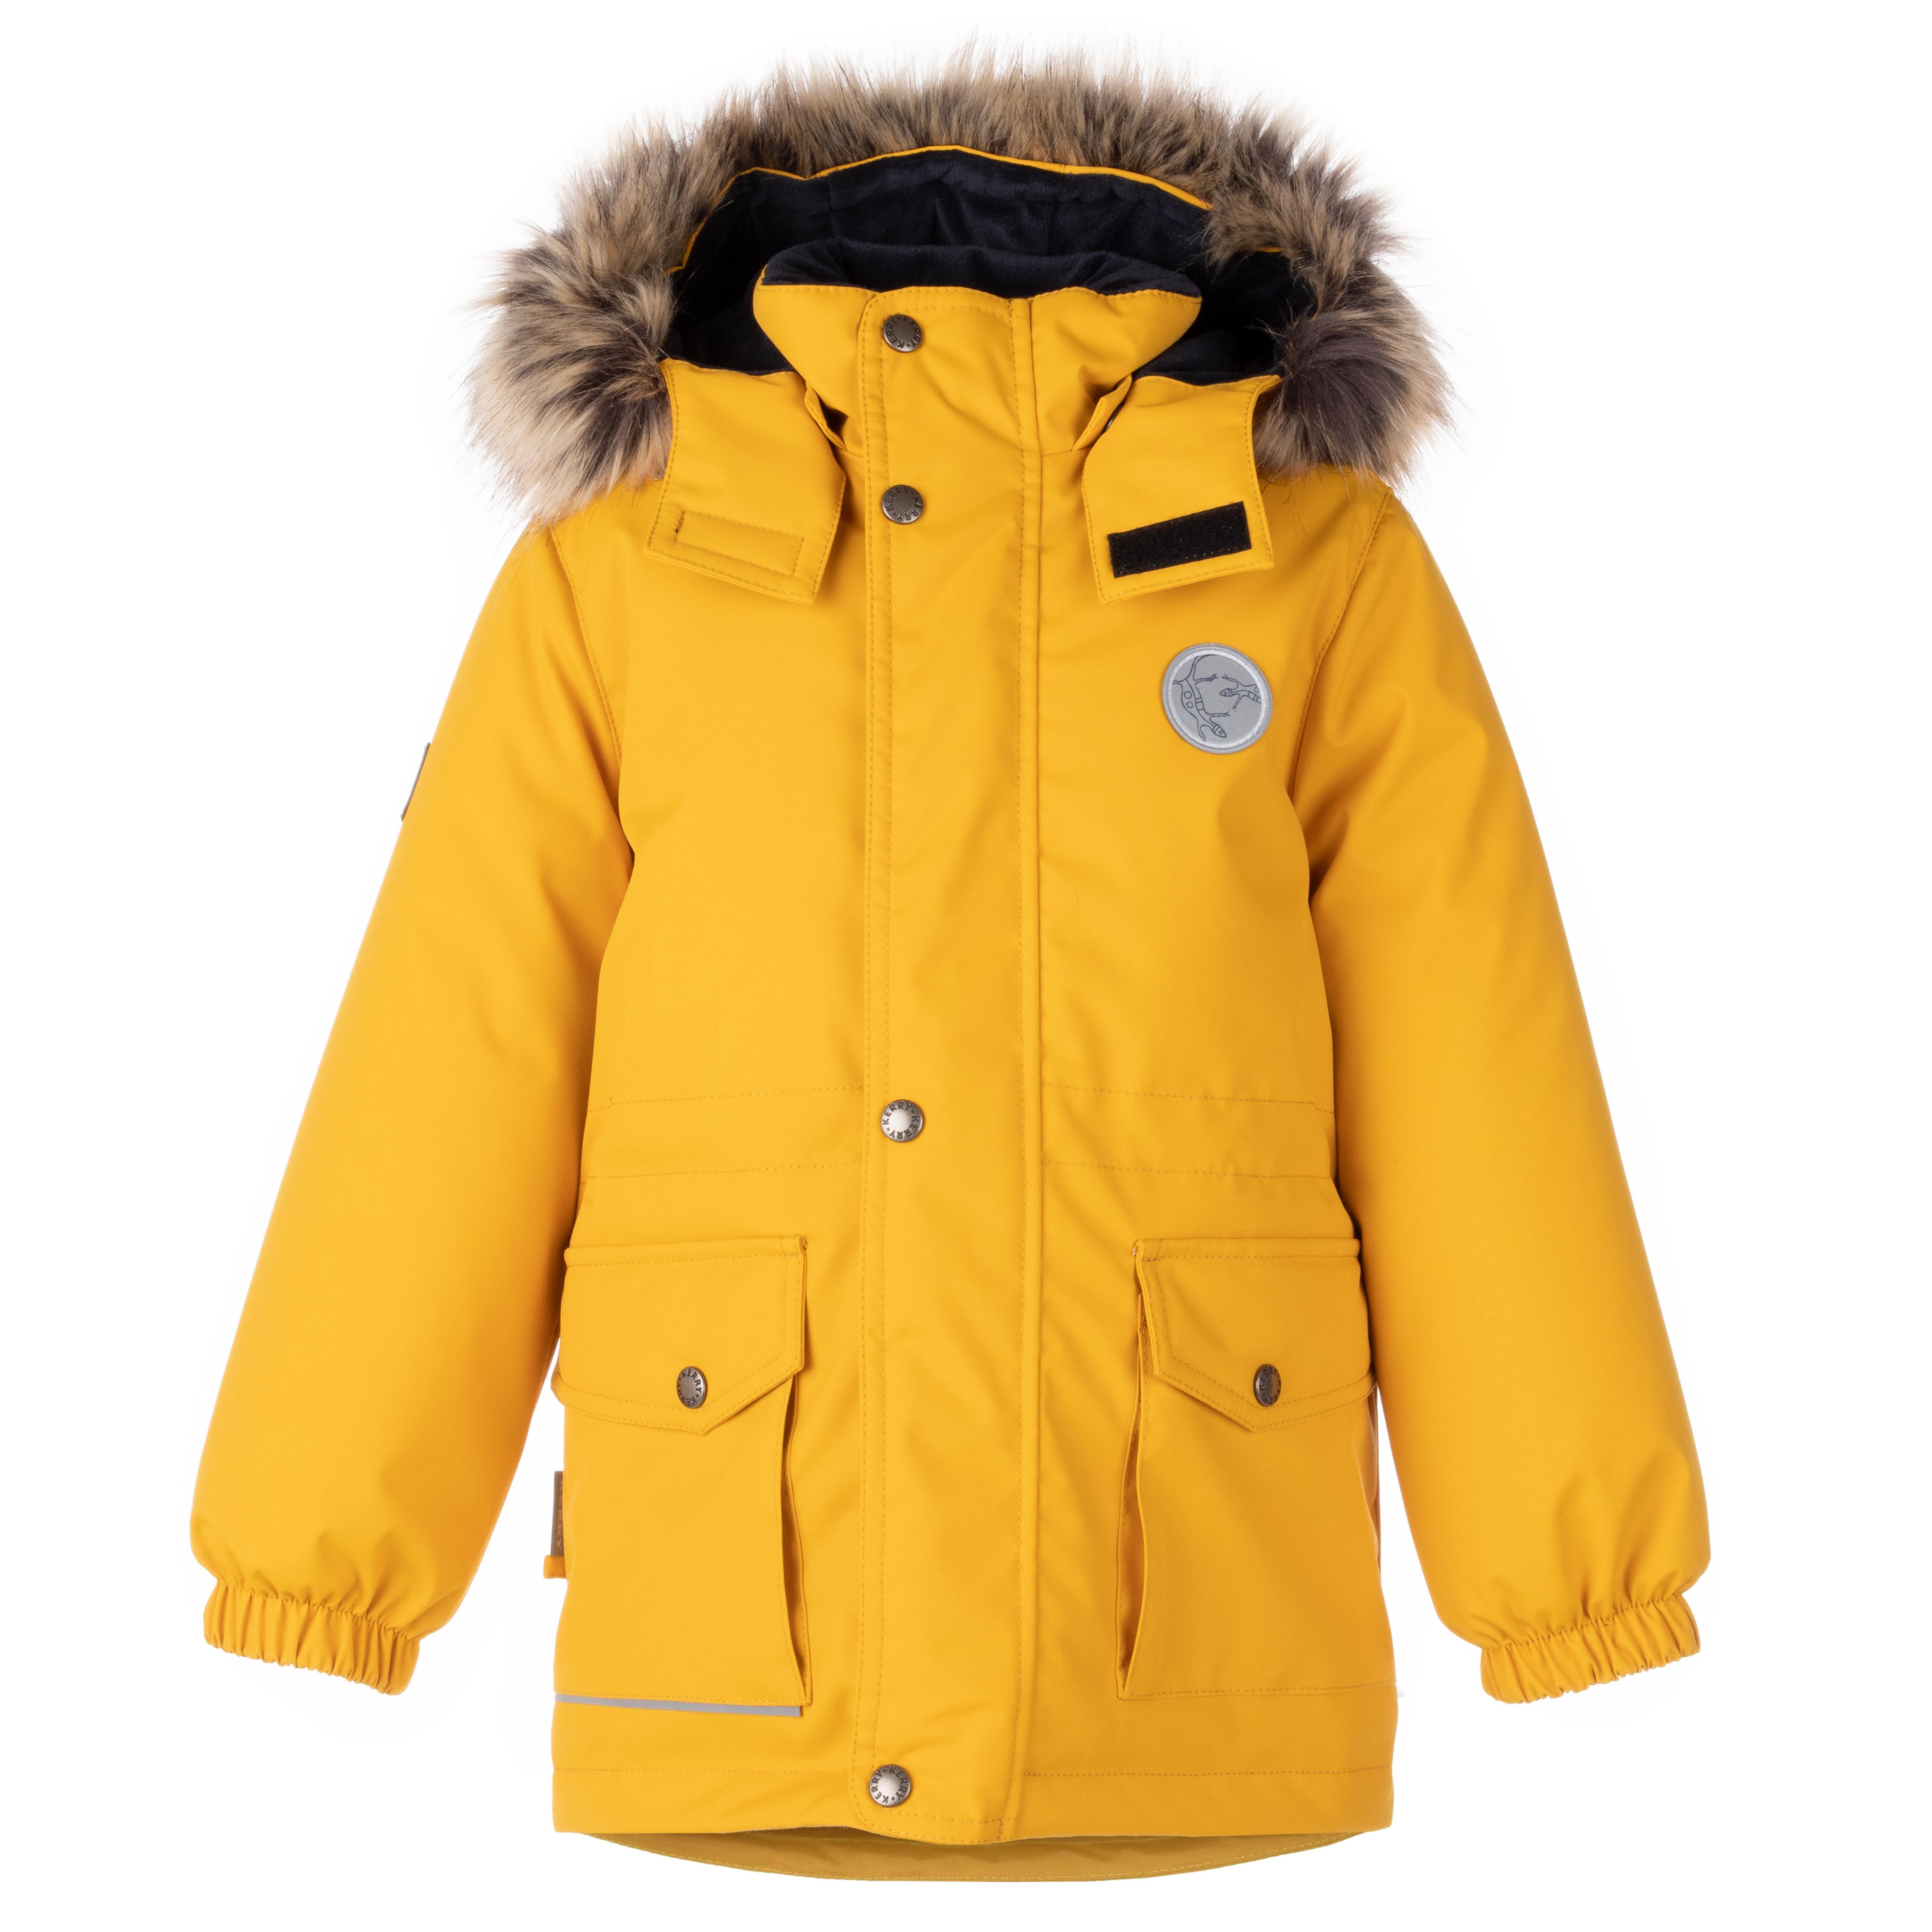 Куртка детская KERRY K23439, желтый, 134 тонер картридж kyocera tk 560y 10000 стр желтый для p6030cdn fs c5300dn fs c5350dn